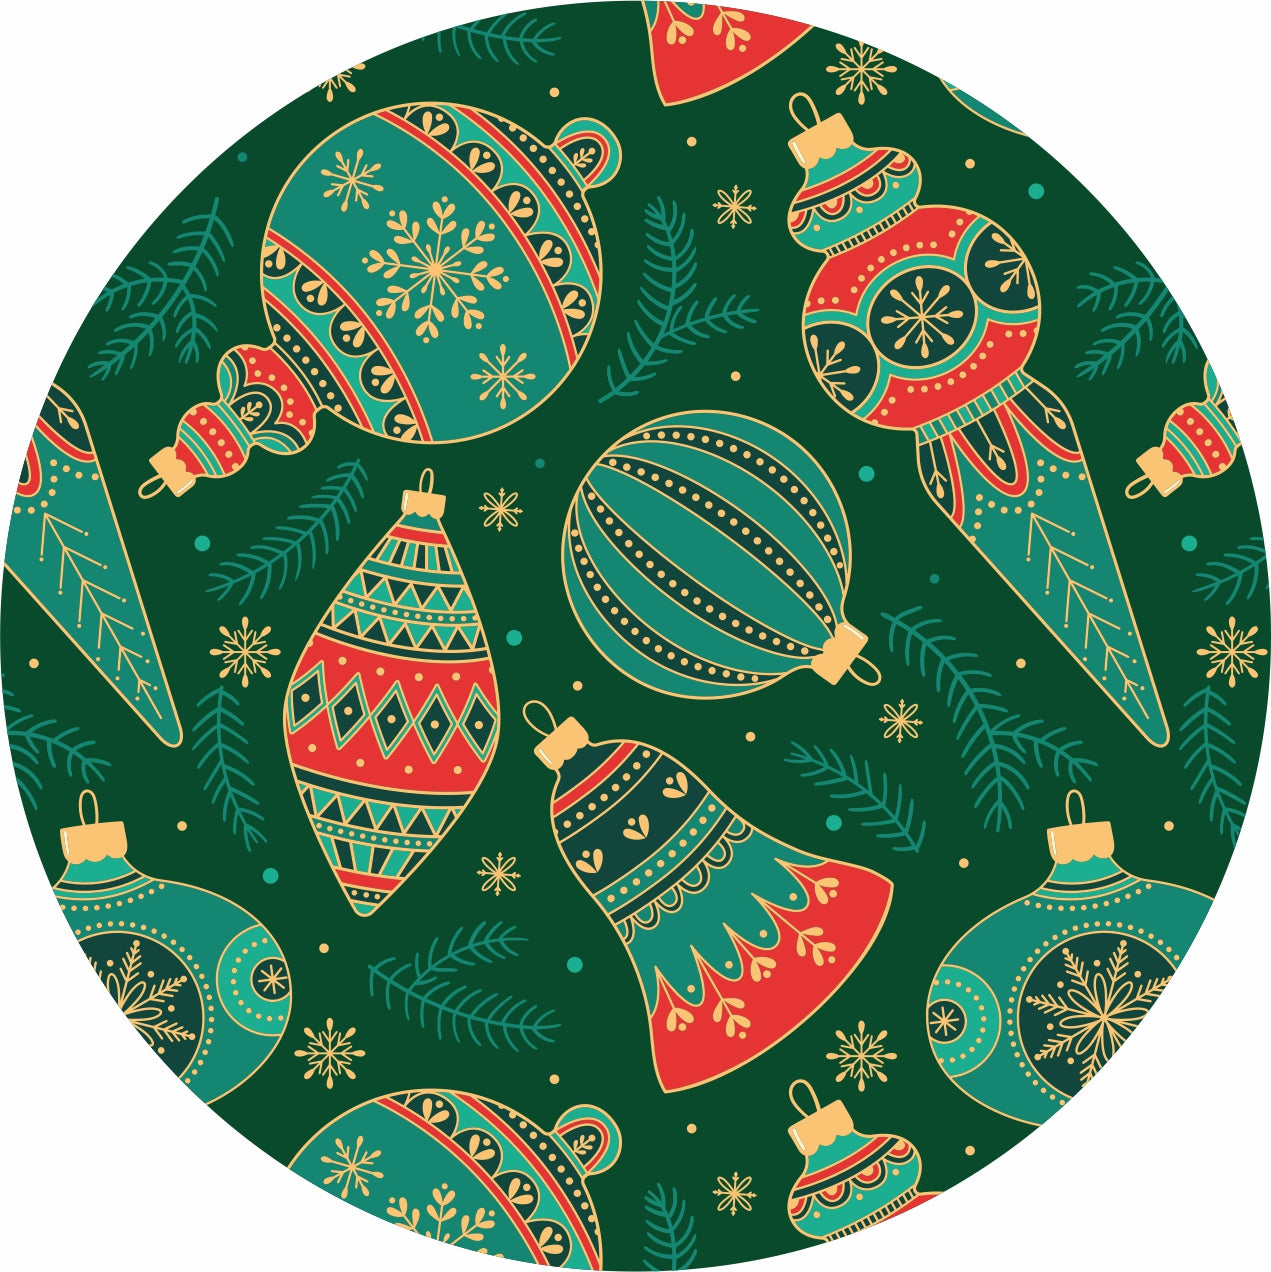 Foil Printed Christmas Coaster - 4inch dia, Christmas Ornaments, 12pc